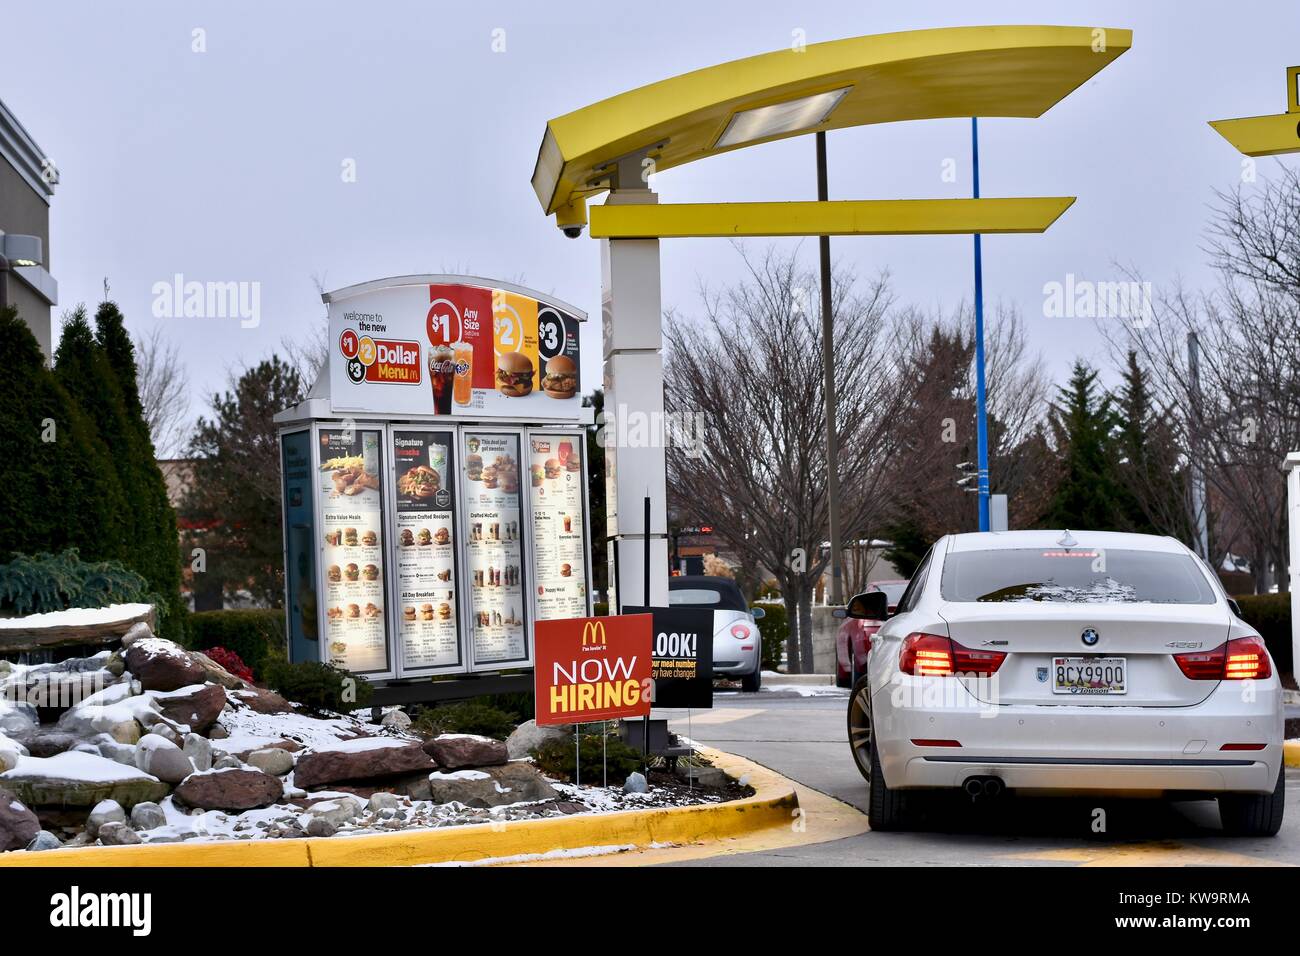 BWM ordering from the McDonald's drive thru menu Stock Photo - Alamy